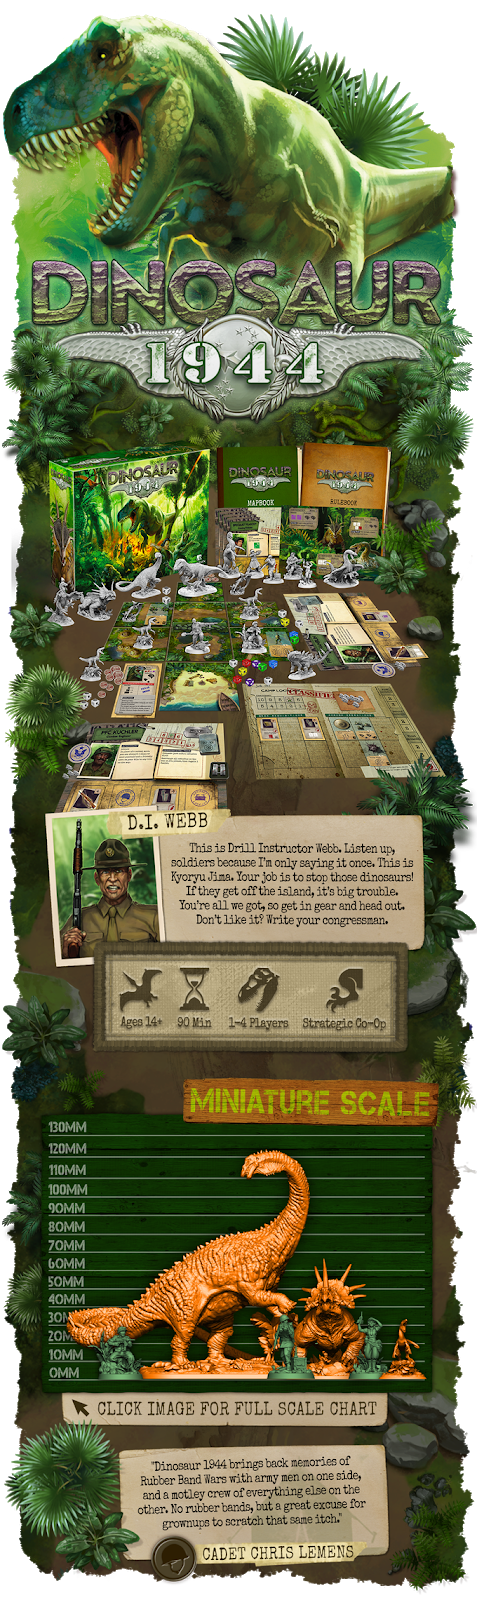 Dinosaur 1944 Main - Petersen Games